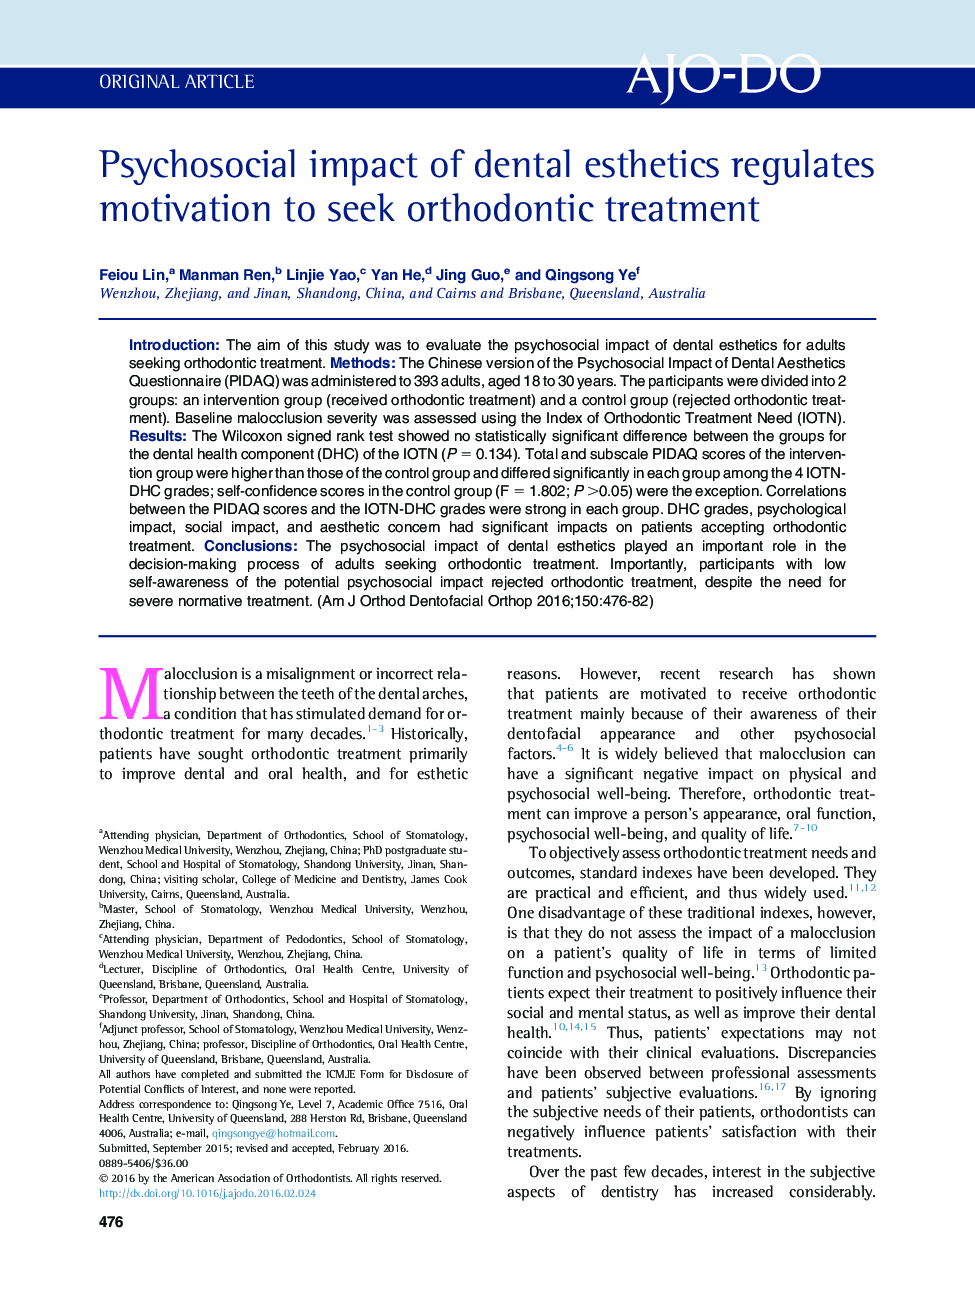 Psychosocial impact of dental esthetics regulates motivation to seek orthodontic treatment 